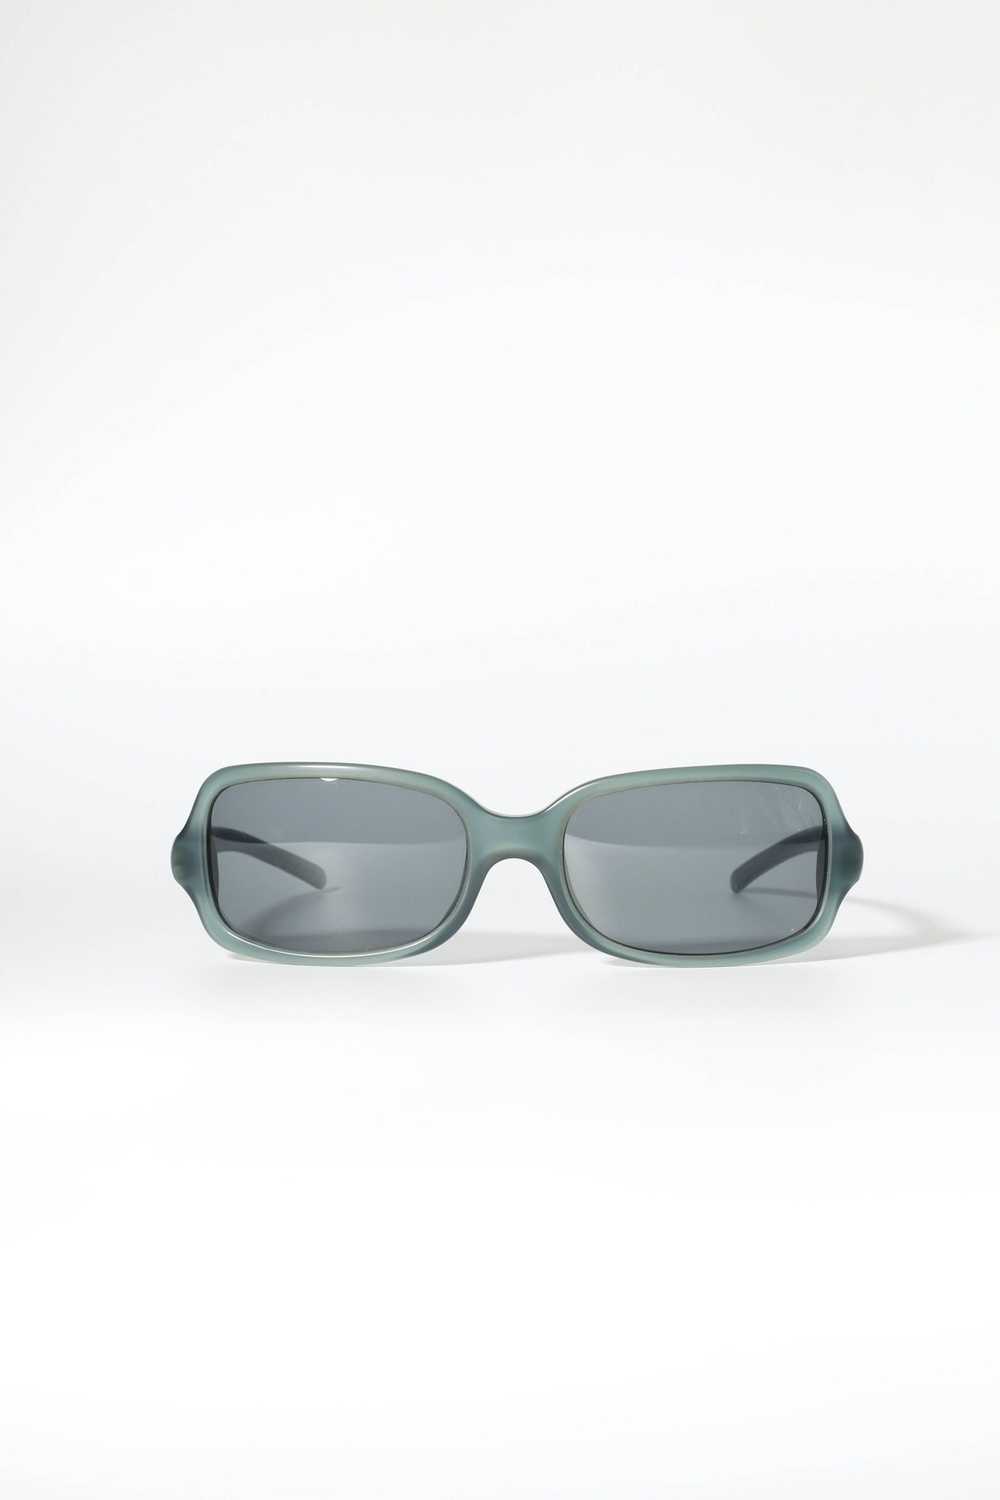 Prada Prada SS2000 sunglasses - image 2